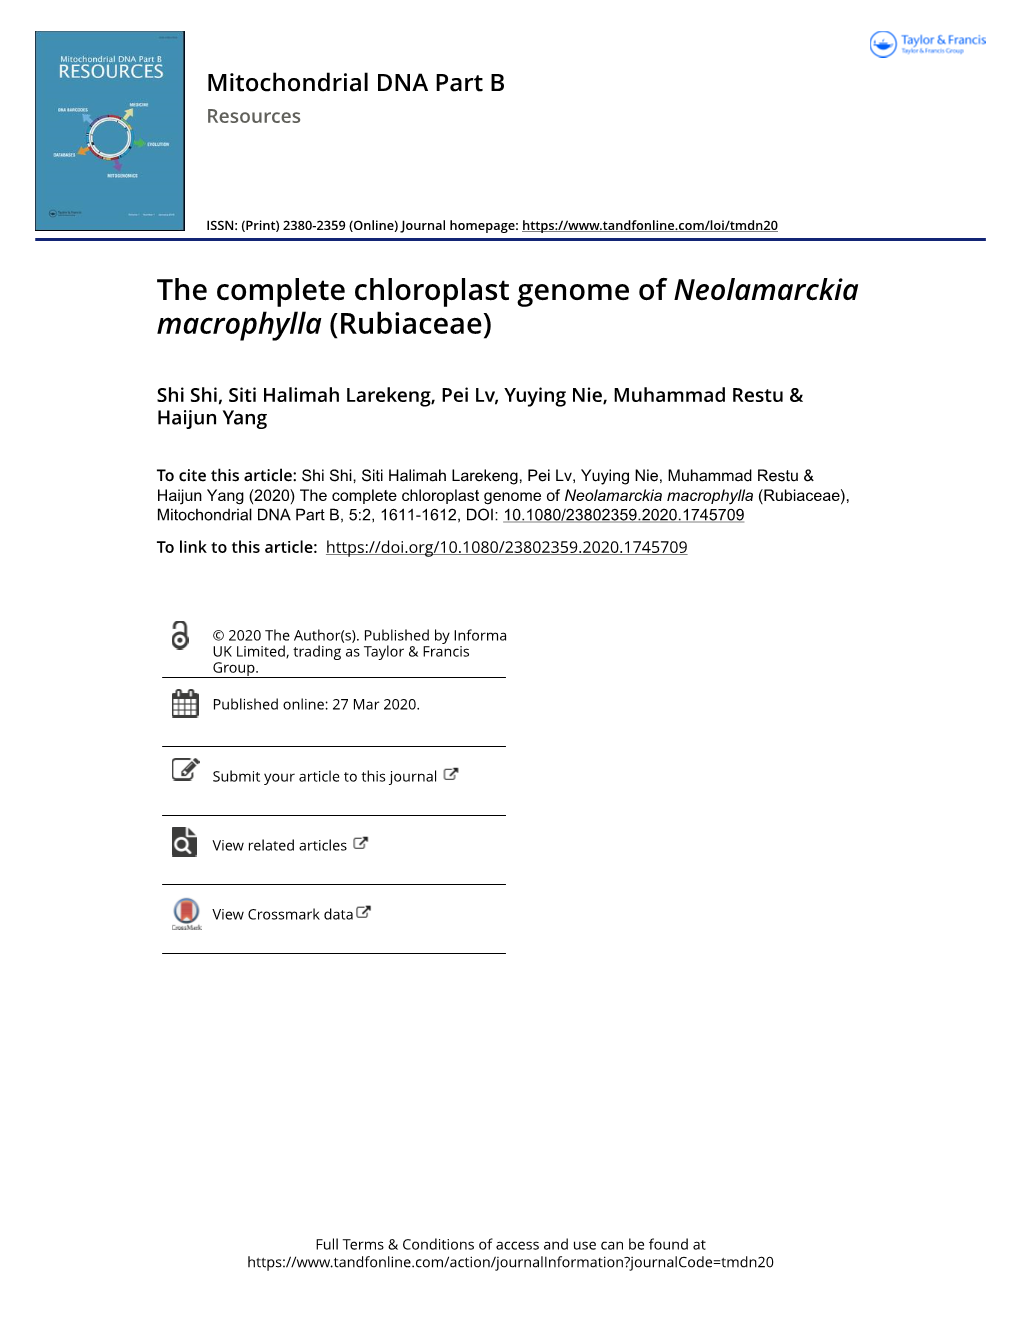 The Complete Chloroplast Genome of Neolamarckia Macrophylla (Rubiaceae)